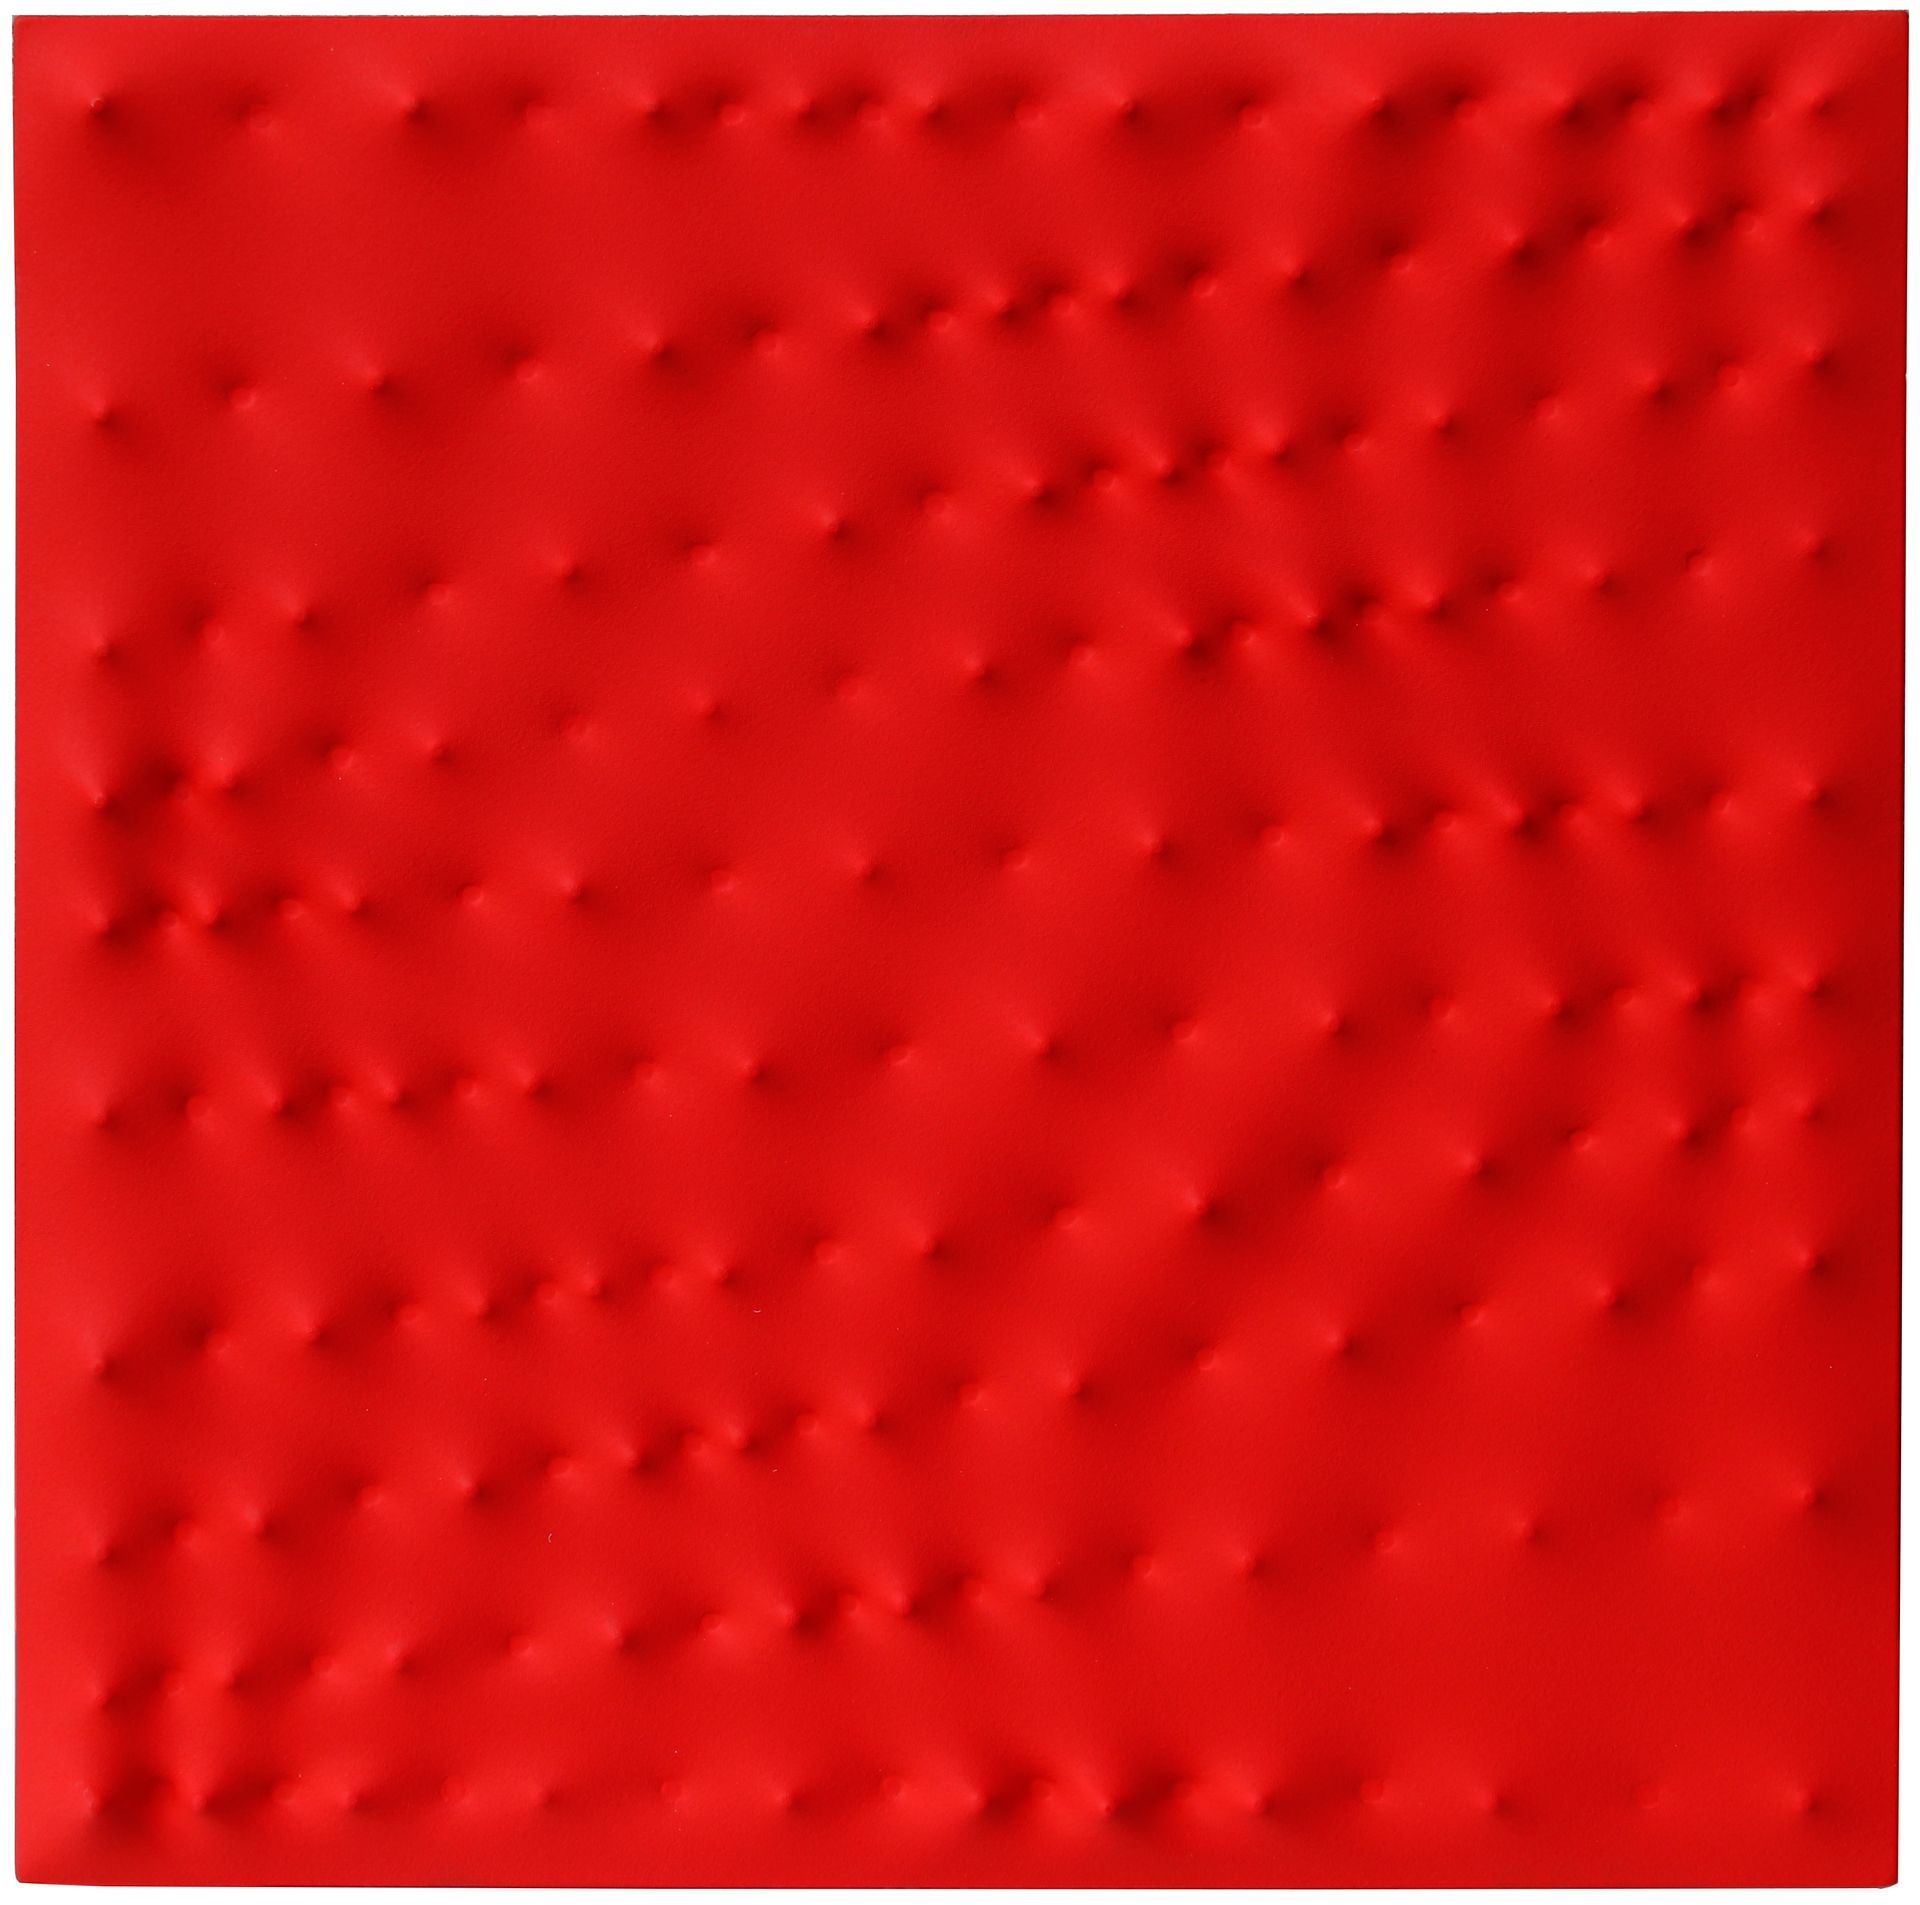 Enrico CASTELLANI Superficie rossa 1993, oil on structured canvas, cm. 60x60

Ce&hellip;